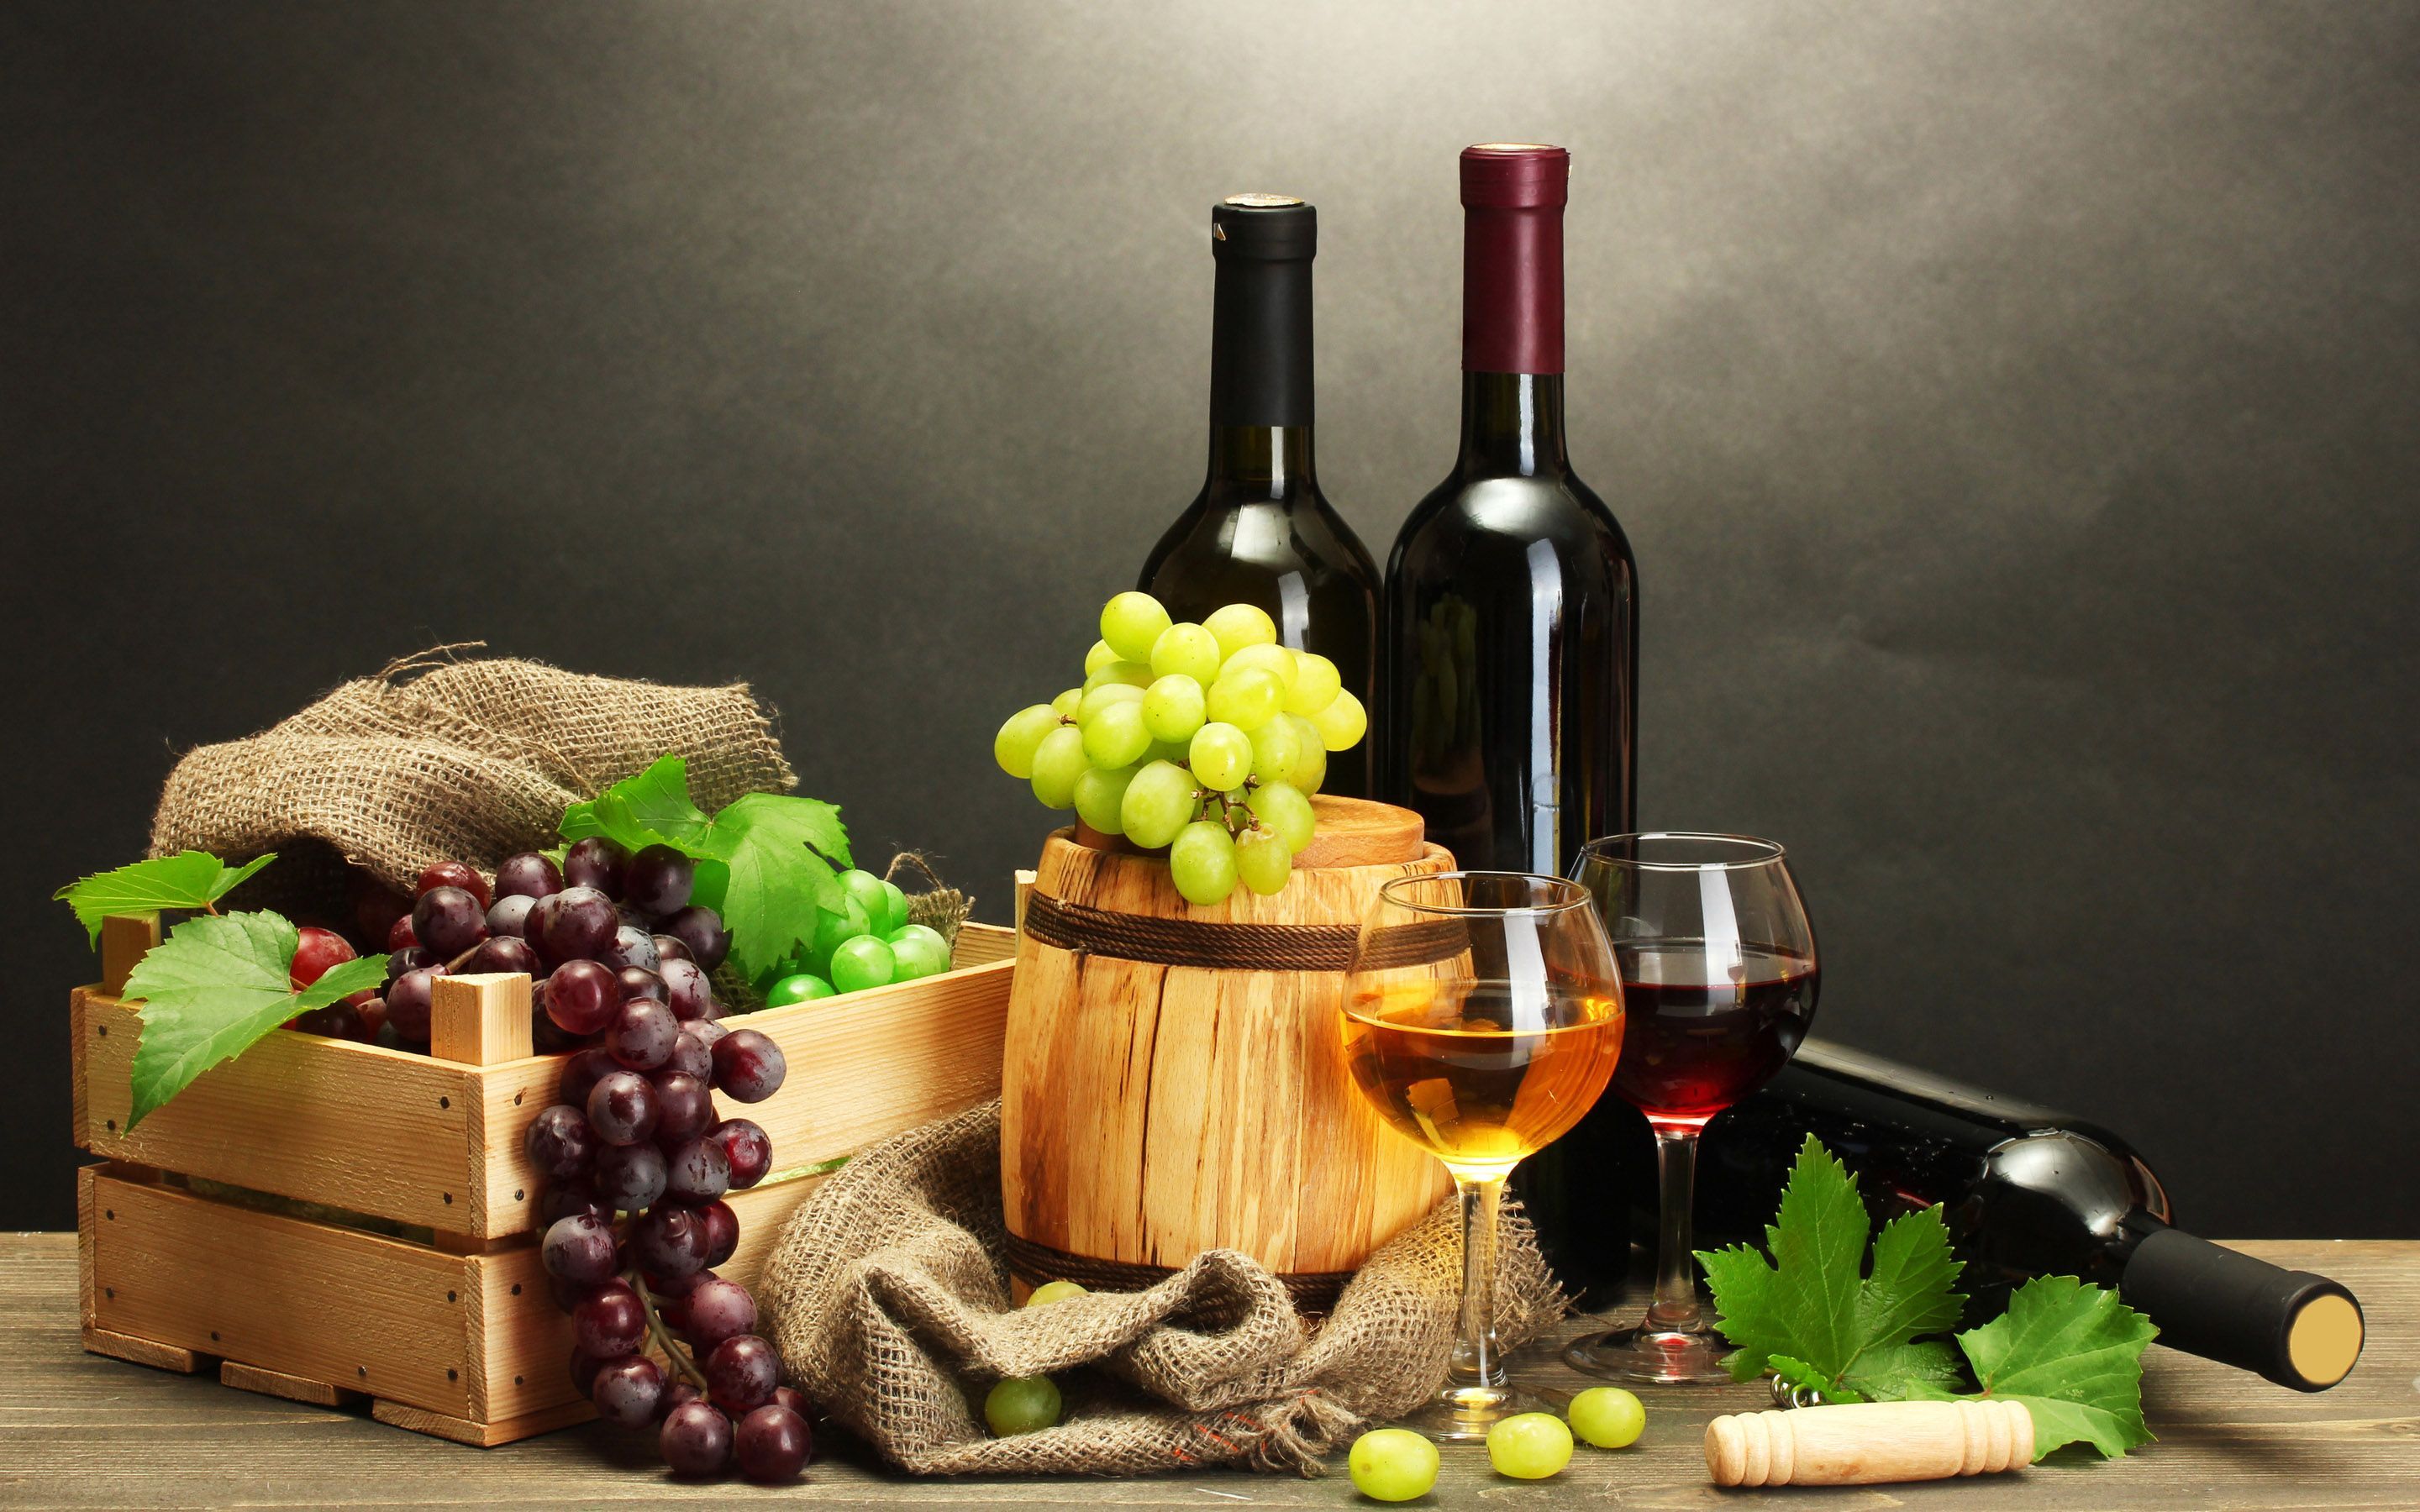 Barrel Wine Bottle Corkscrew Grapes - New HD Backgrounds